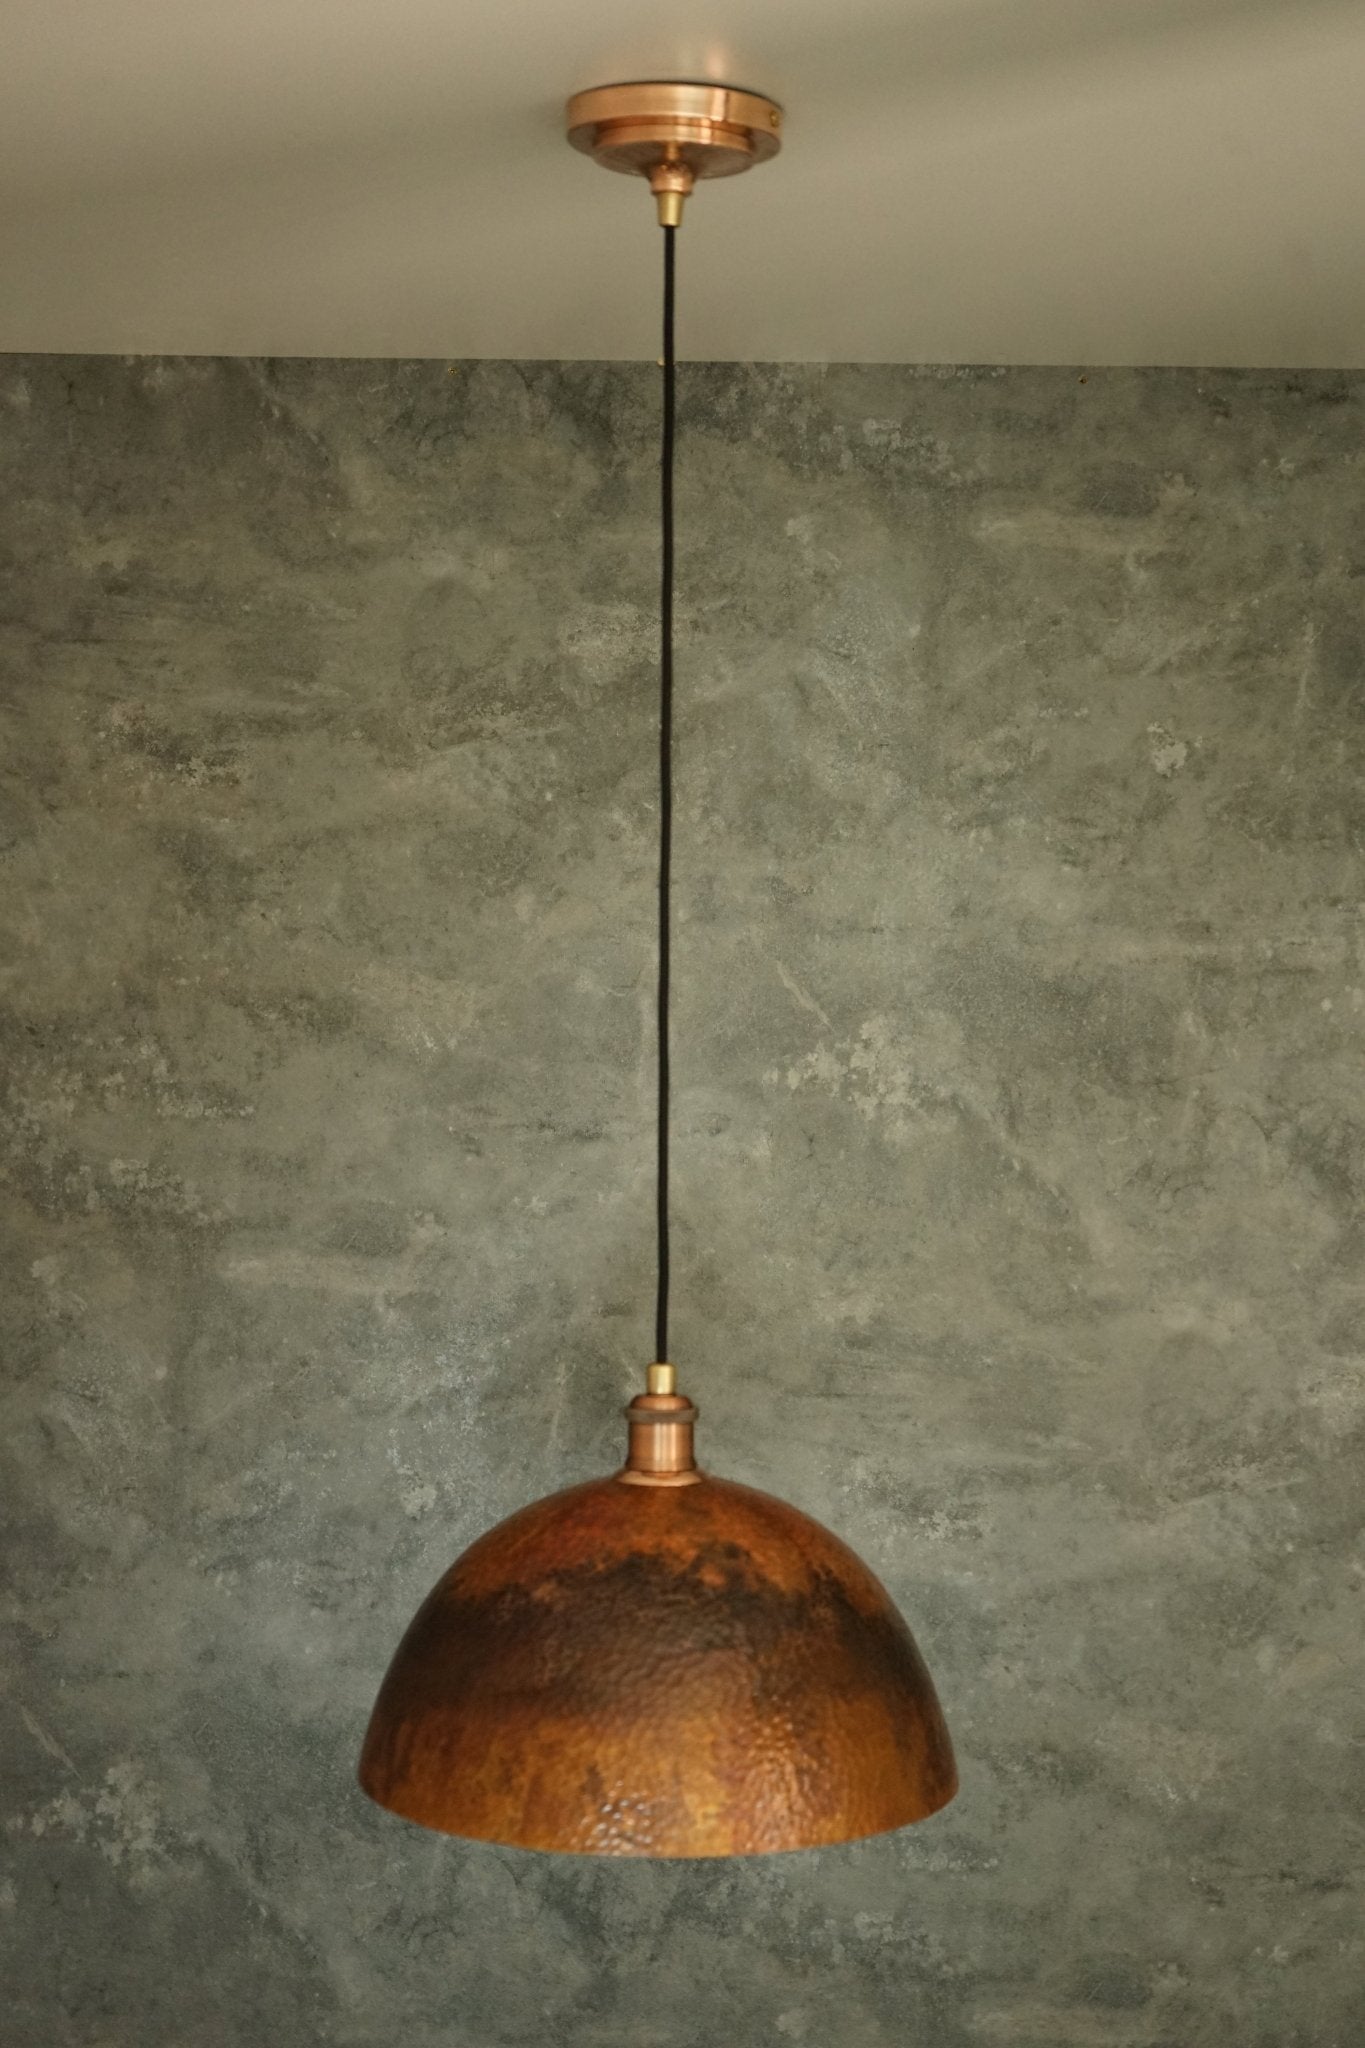 Oxidized Copper Pendant Light, Dome Ceiling Light, Hanging Kitchen Island Light Fixture